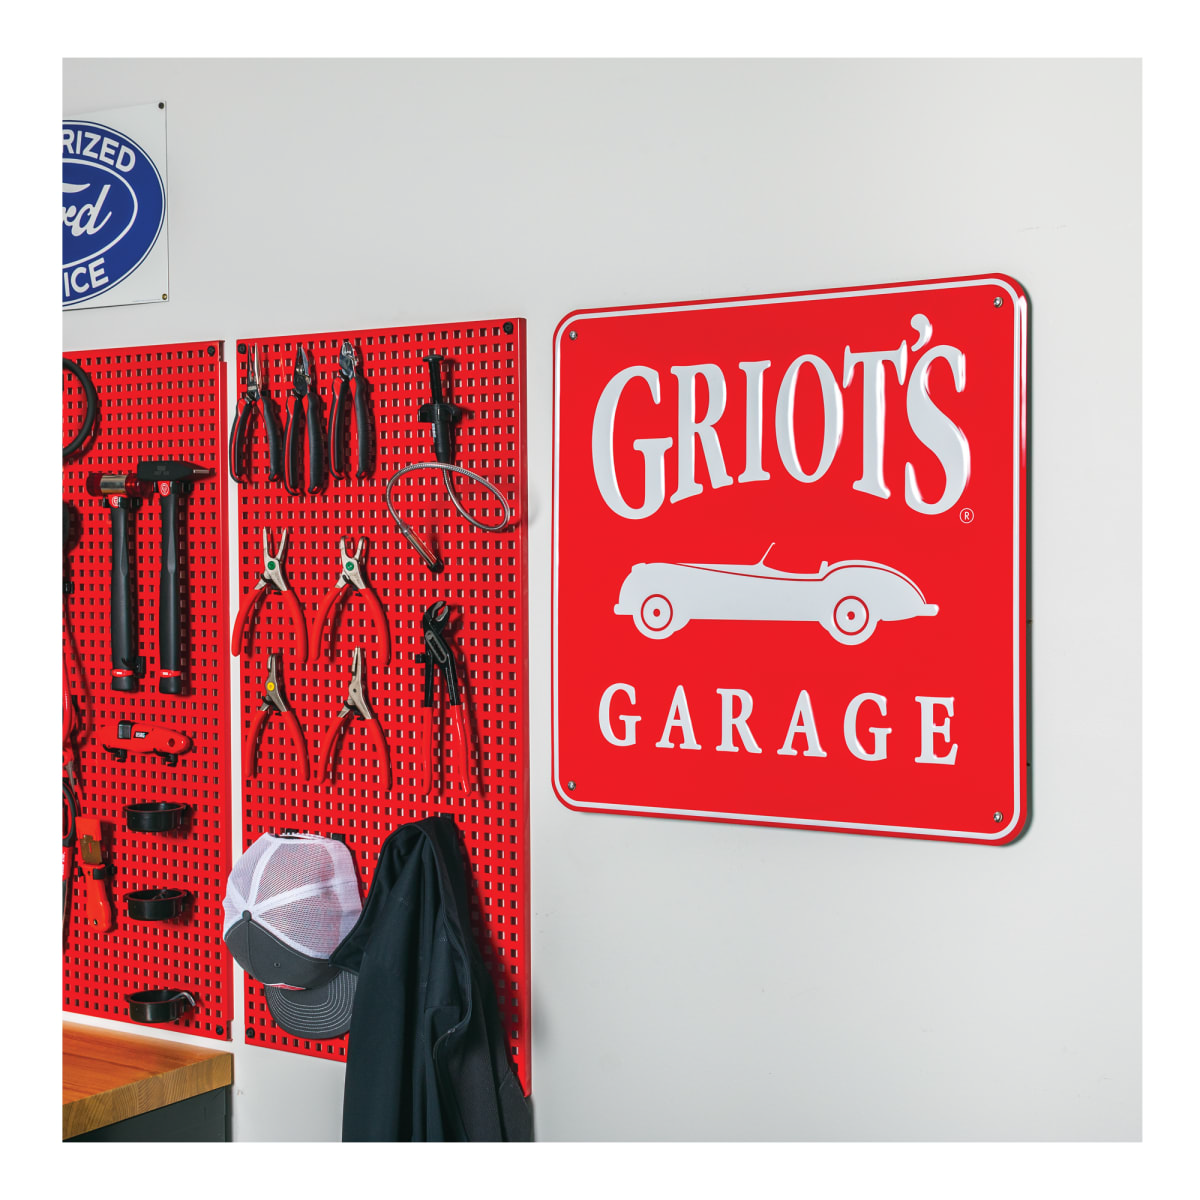 GRIOT'S GARAGE LOGO SIGNイメージ1